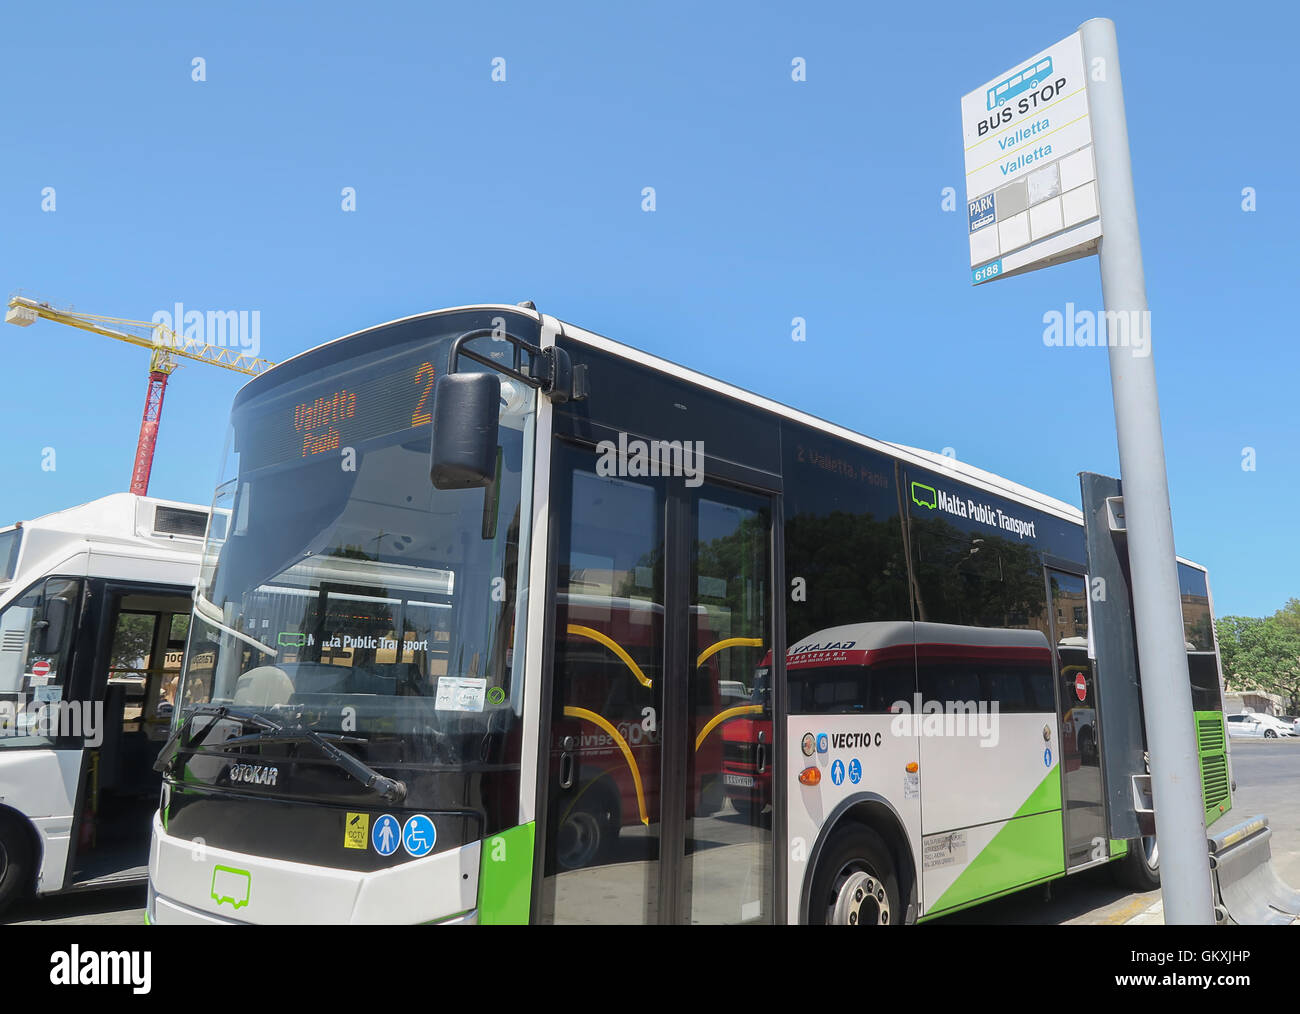 VALLETTA, MALTA - AUGUST 02 2016: Malta Public Transport Bus at Valletta bus stop. Stock Photo